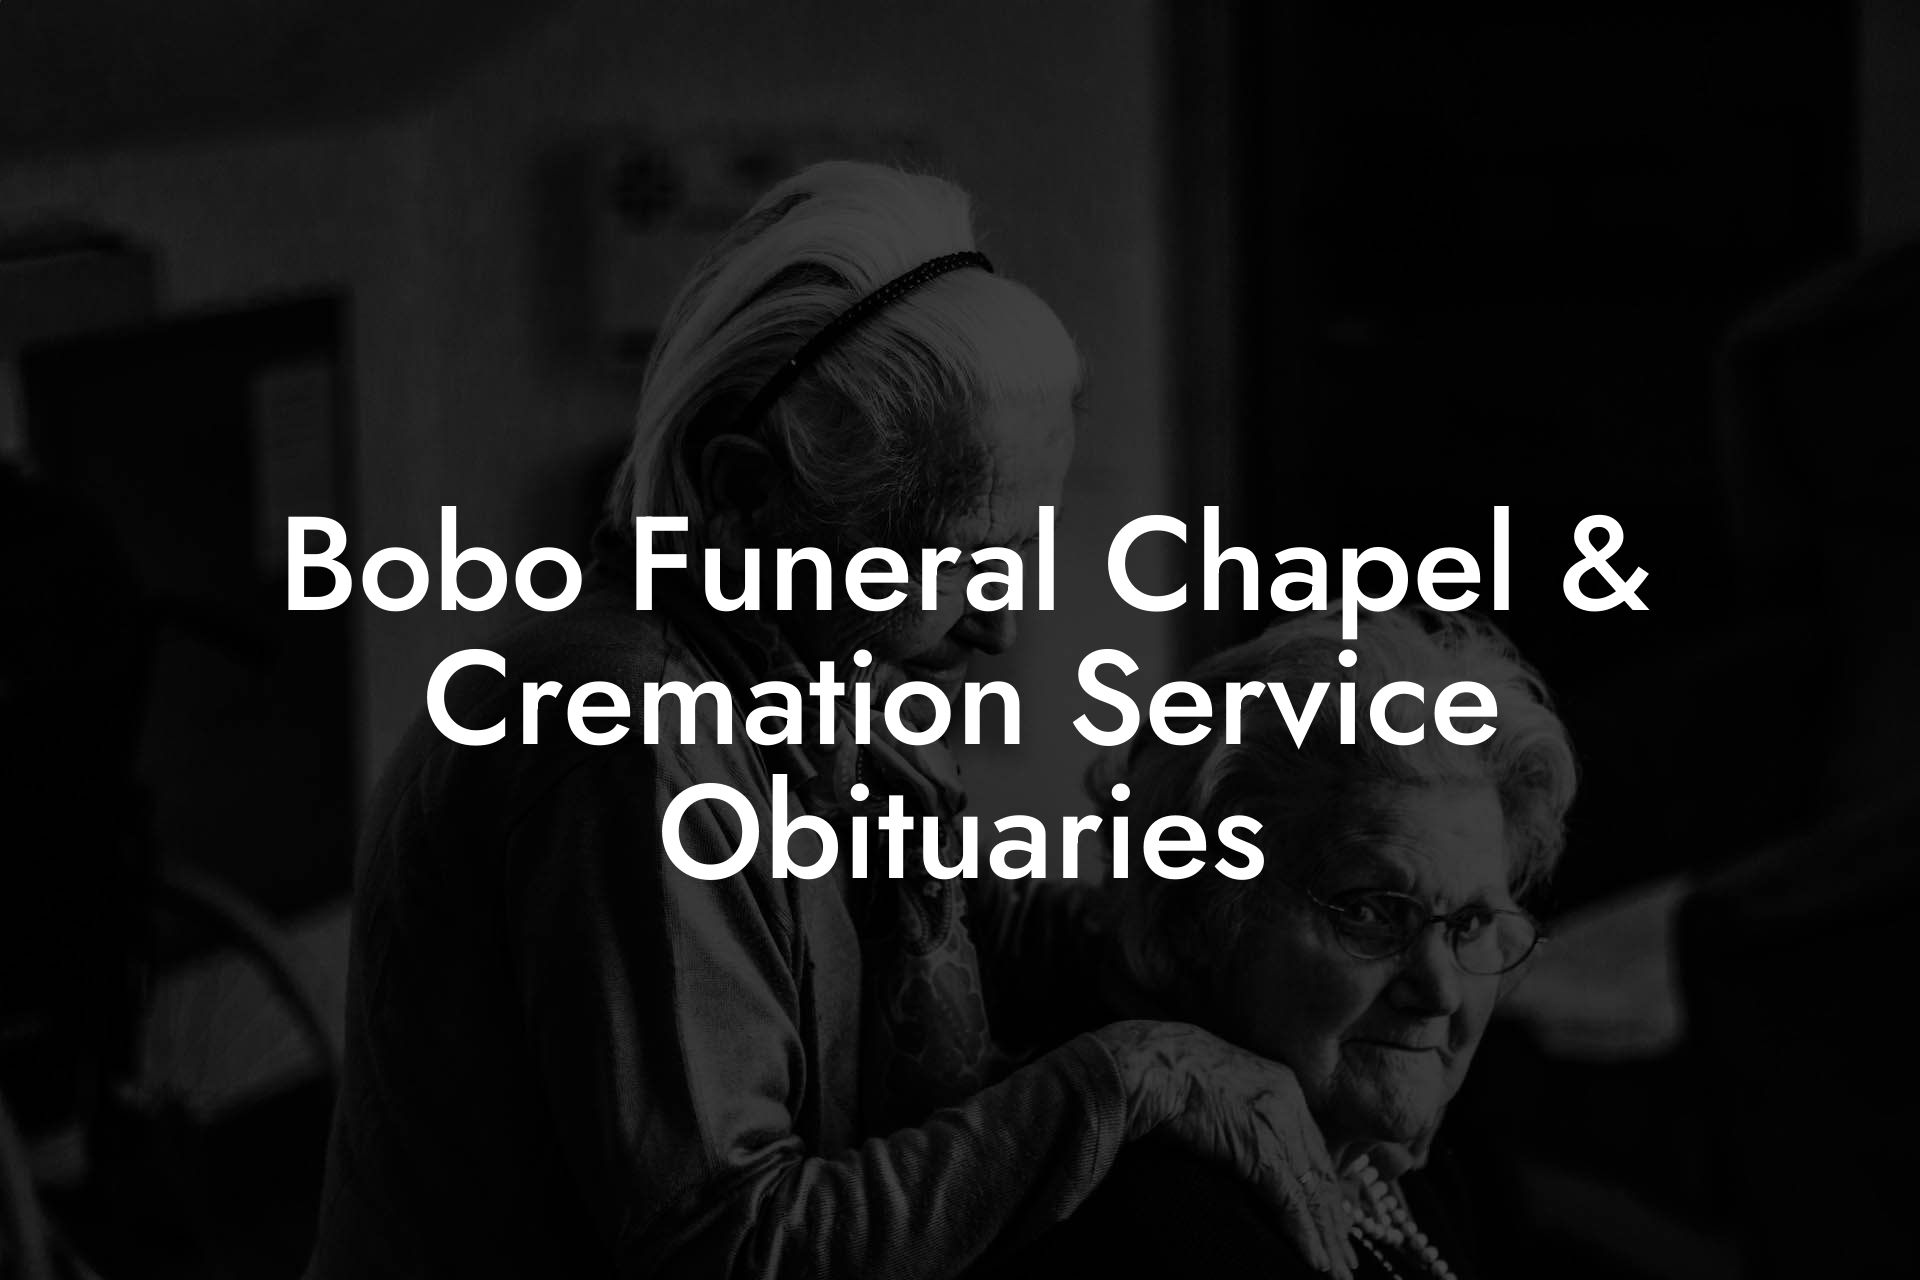 Bobo Funeral Chapel & Cremation Service Obituaries